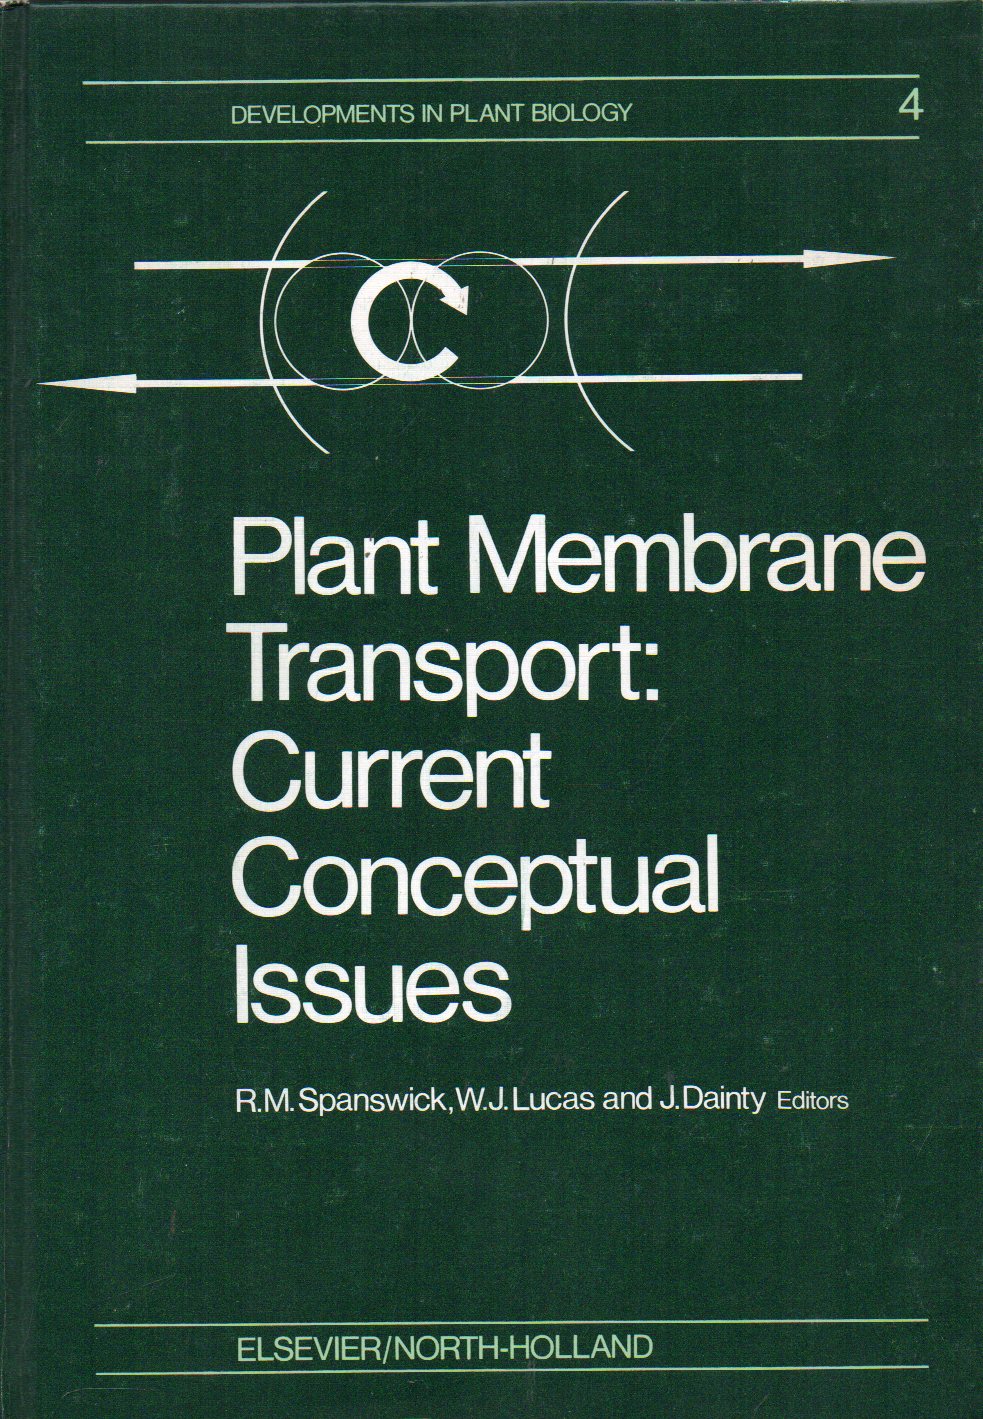 Plant Membrane Transport: Current Conceptual Issues - Spanswick,R.M.+W.J.Lucas+J.Dainty (eds.)